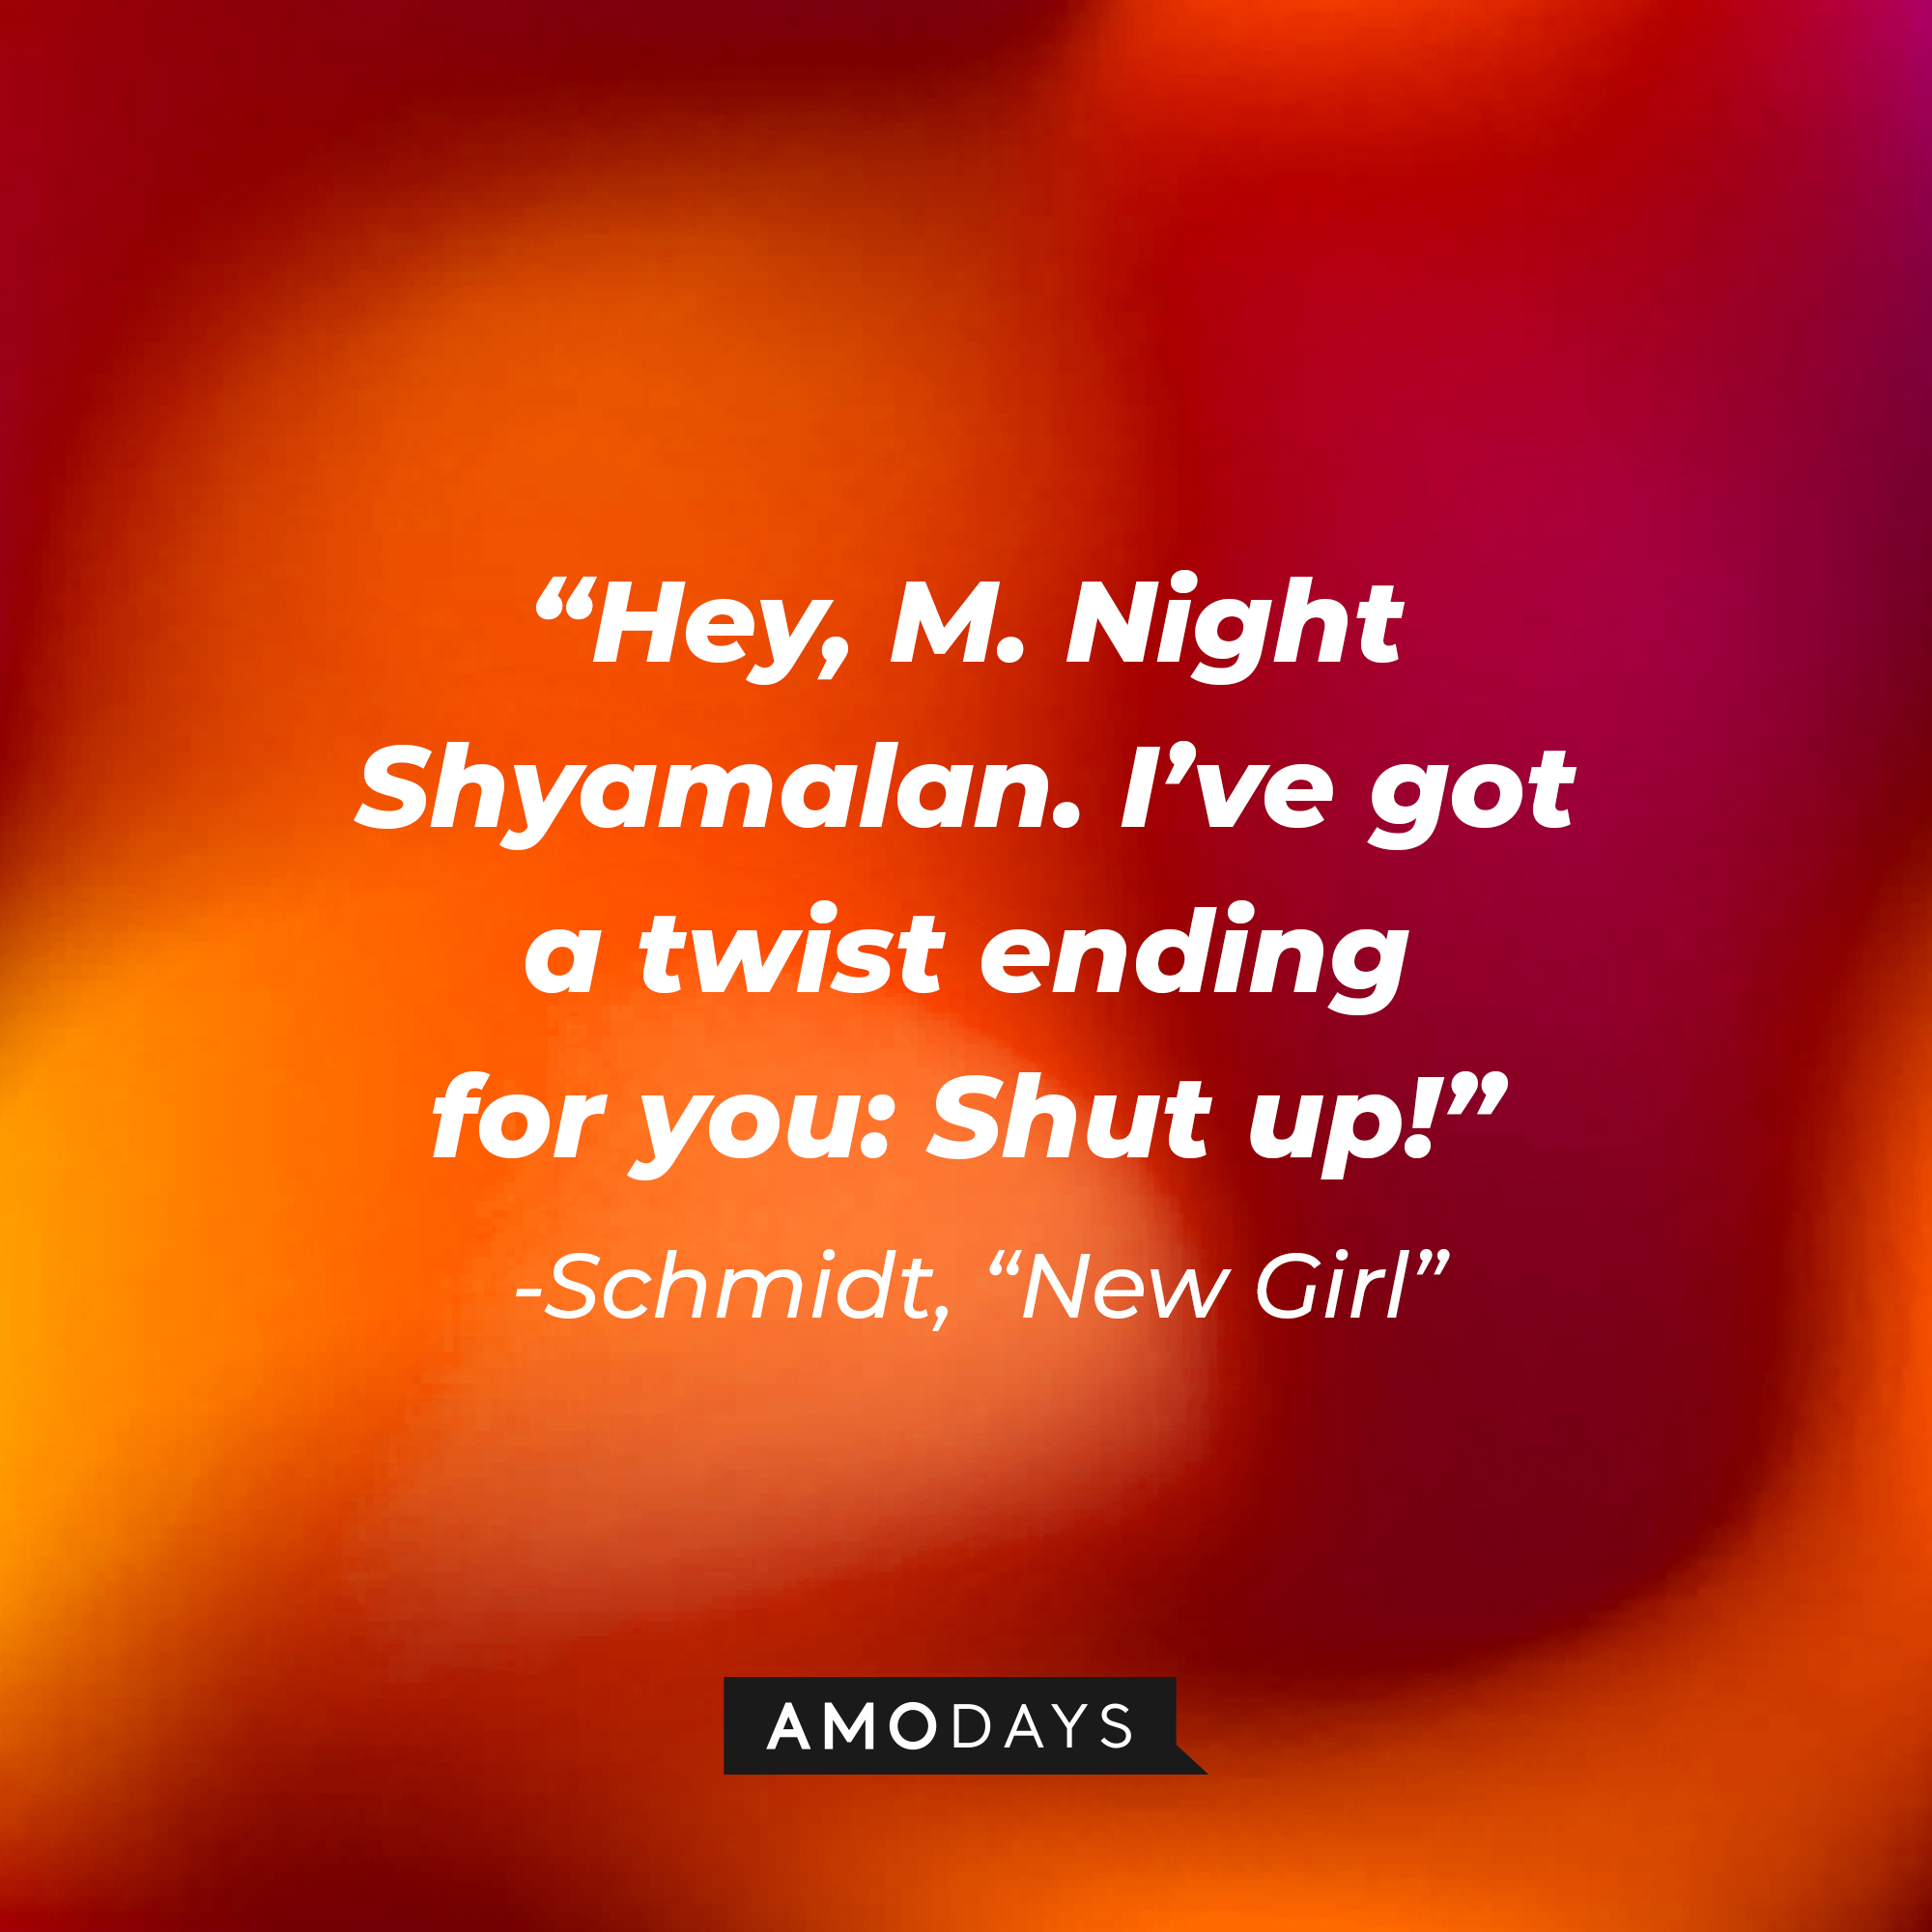 Schmidt's quote: "Hey, M. Night Shyamalan. I’ve got a twist ending for you: Shut up!" | Source: Amodays